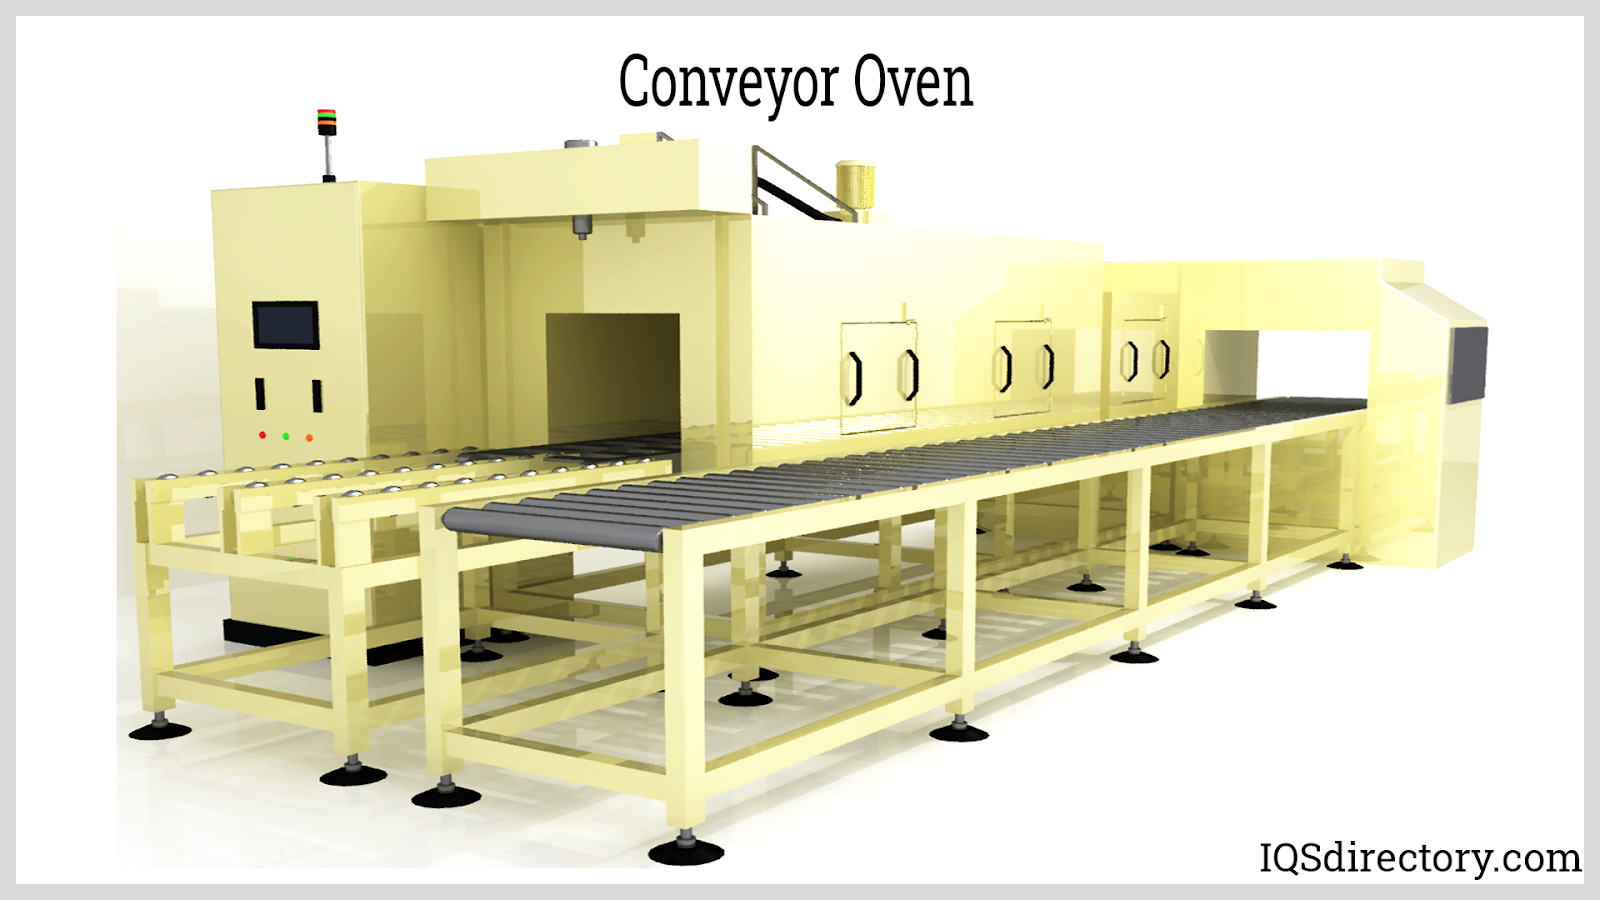 Industrial Oven Manufacturer, Dozens of Options